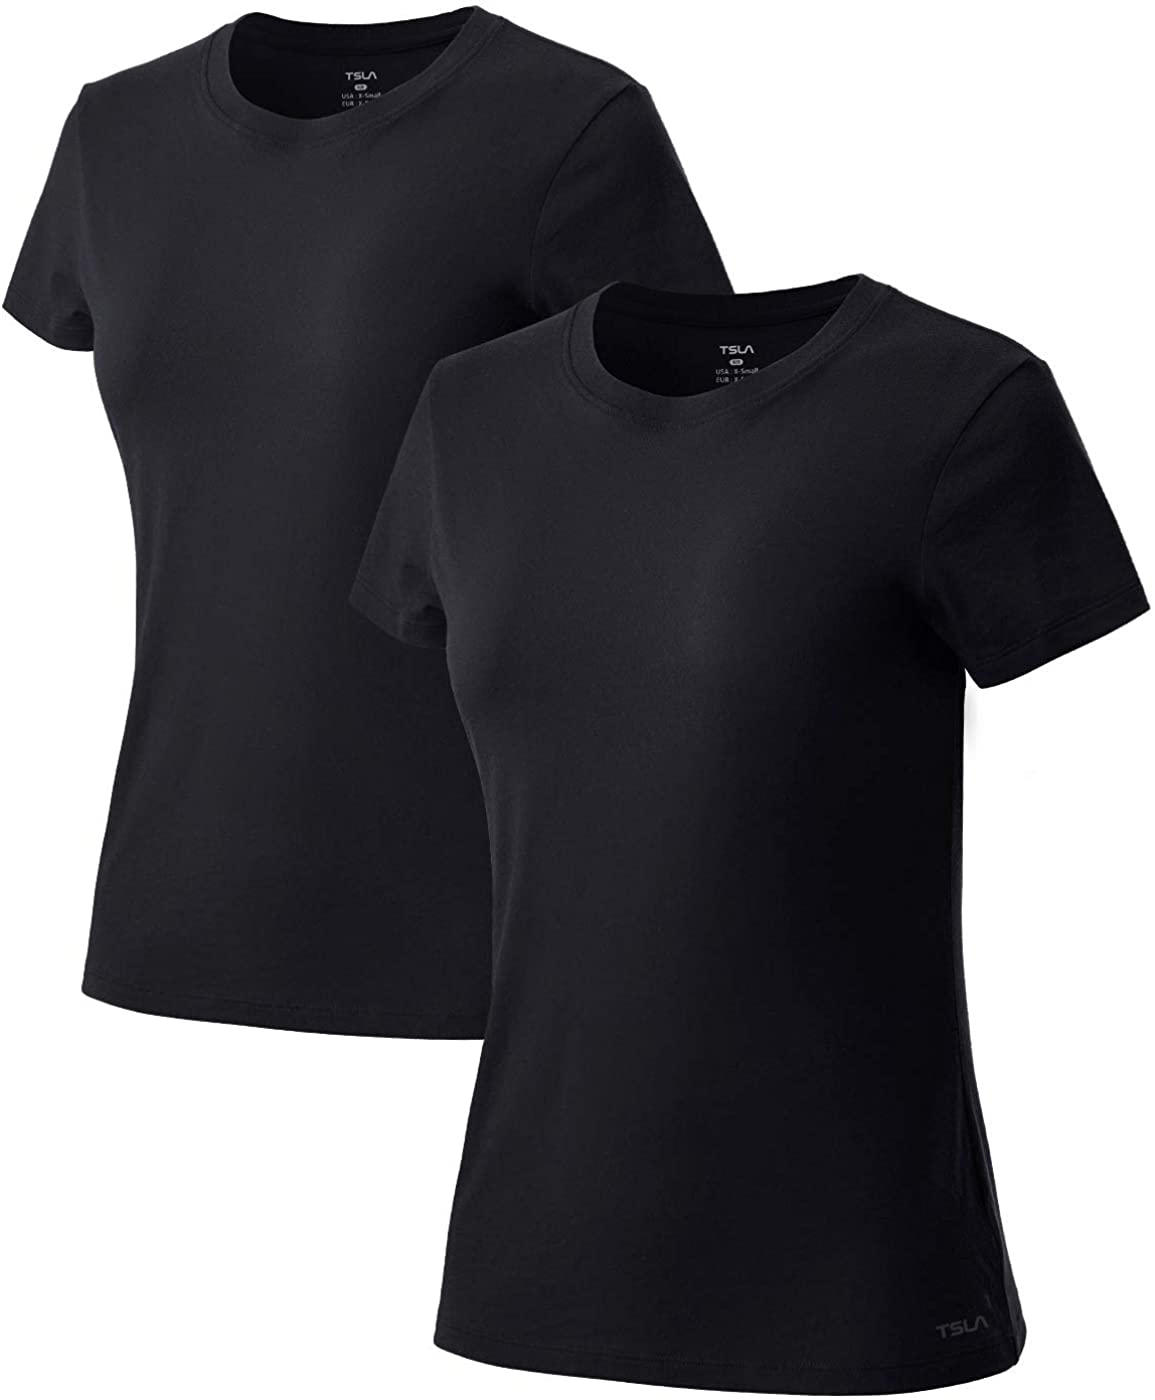 V-Neck Shirt Short-Sleeve Workout Athletic TSLA Womens Pack of 1, 2 